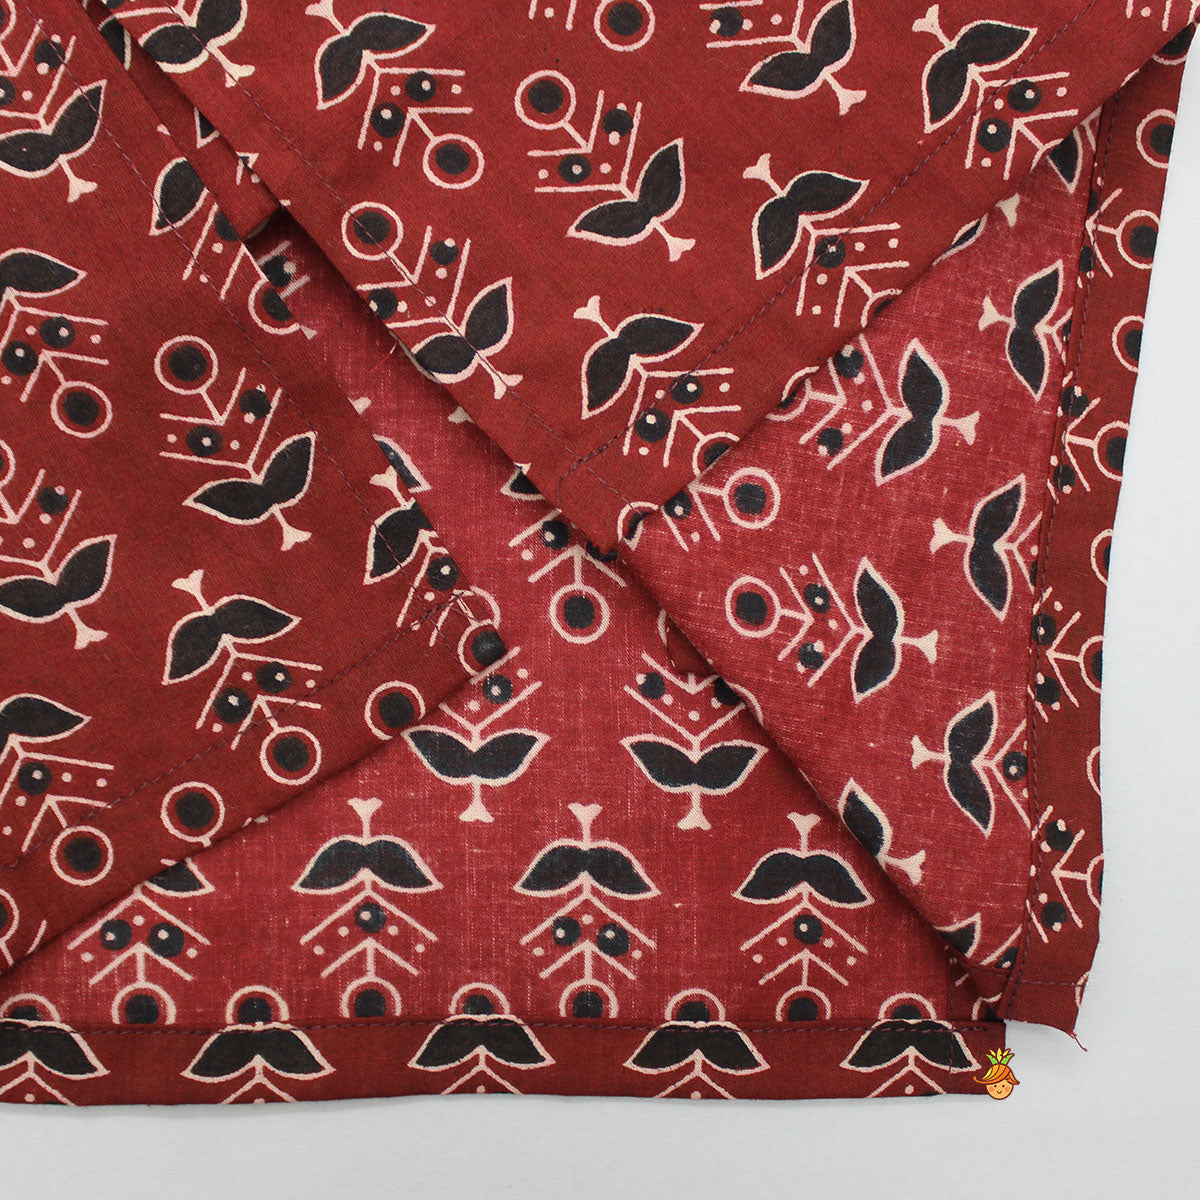 Pockets Detail Brown Kurta With Stylish Hem Printed Jacket And Pyjama